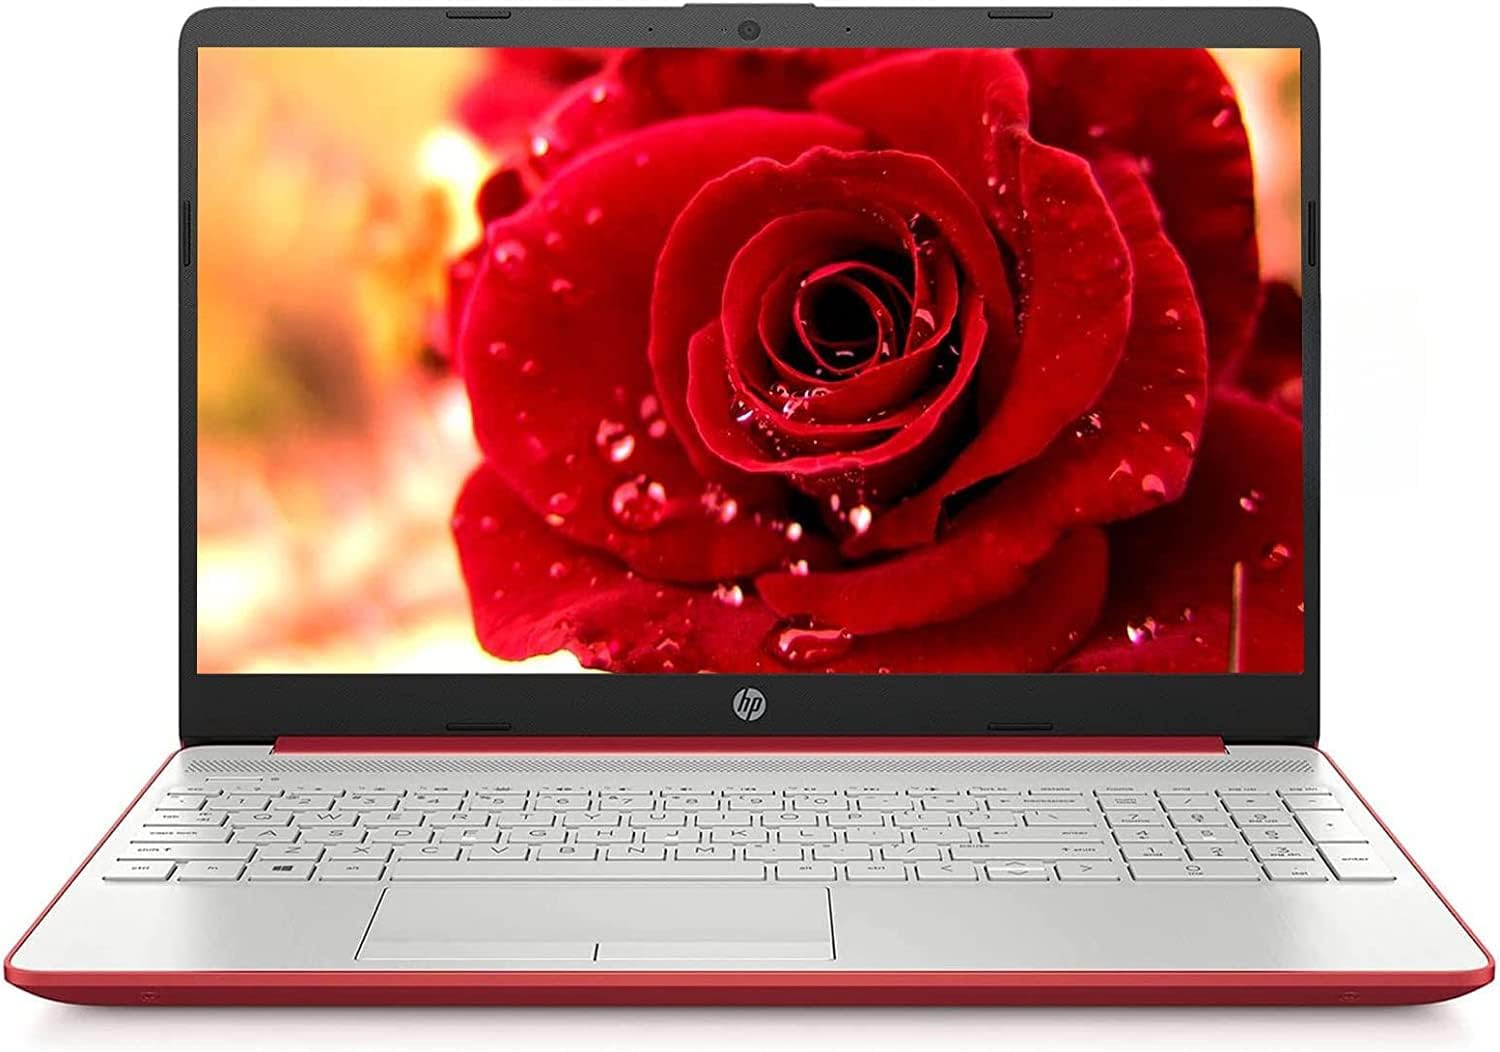 HP Pavillion 15.6 HD Newest Laptop Computer for [...]